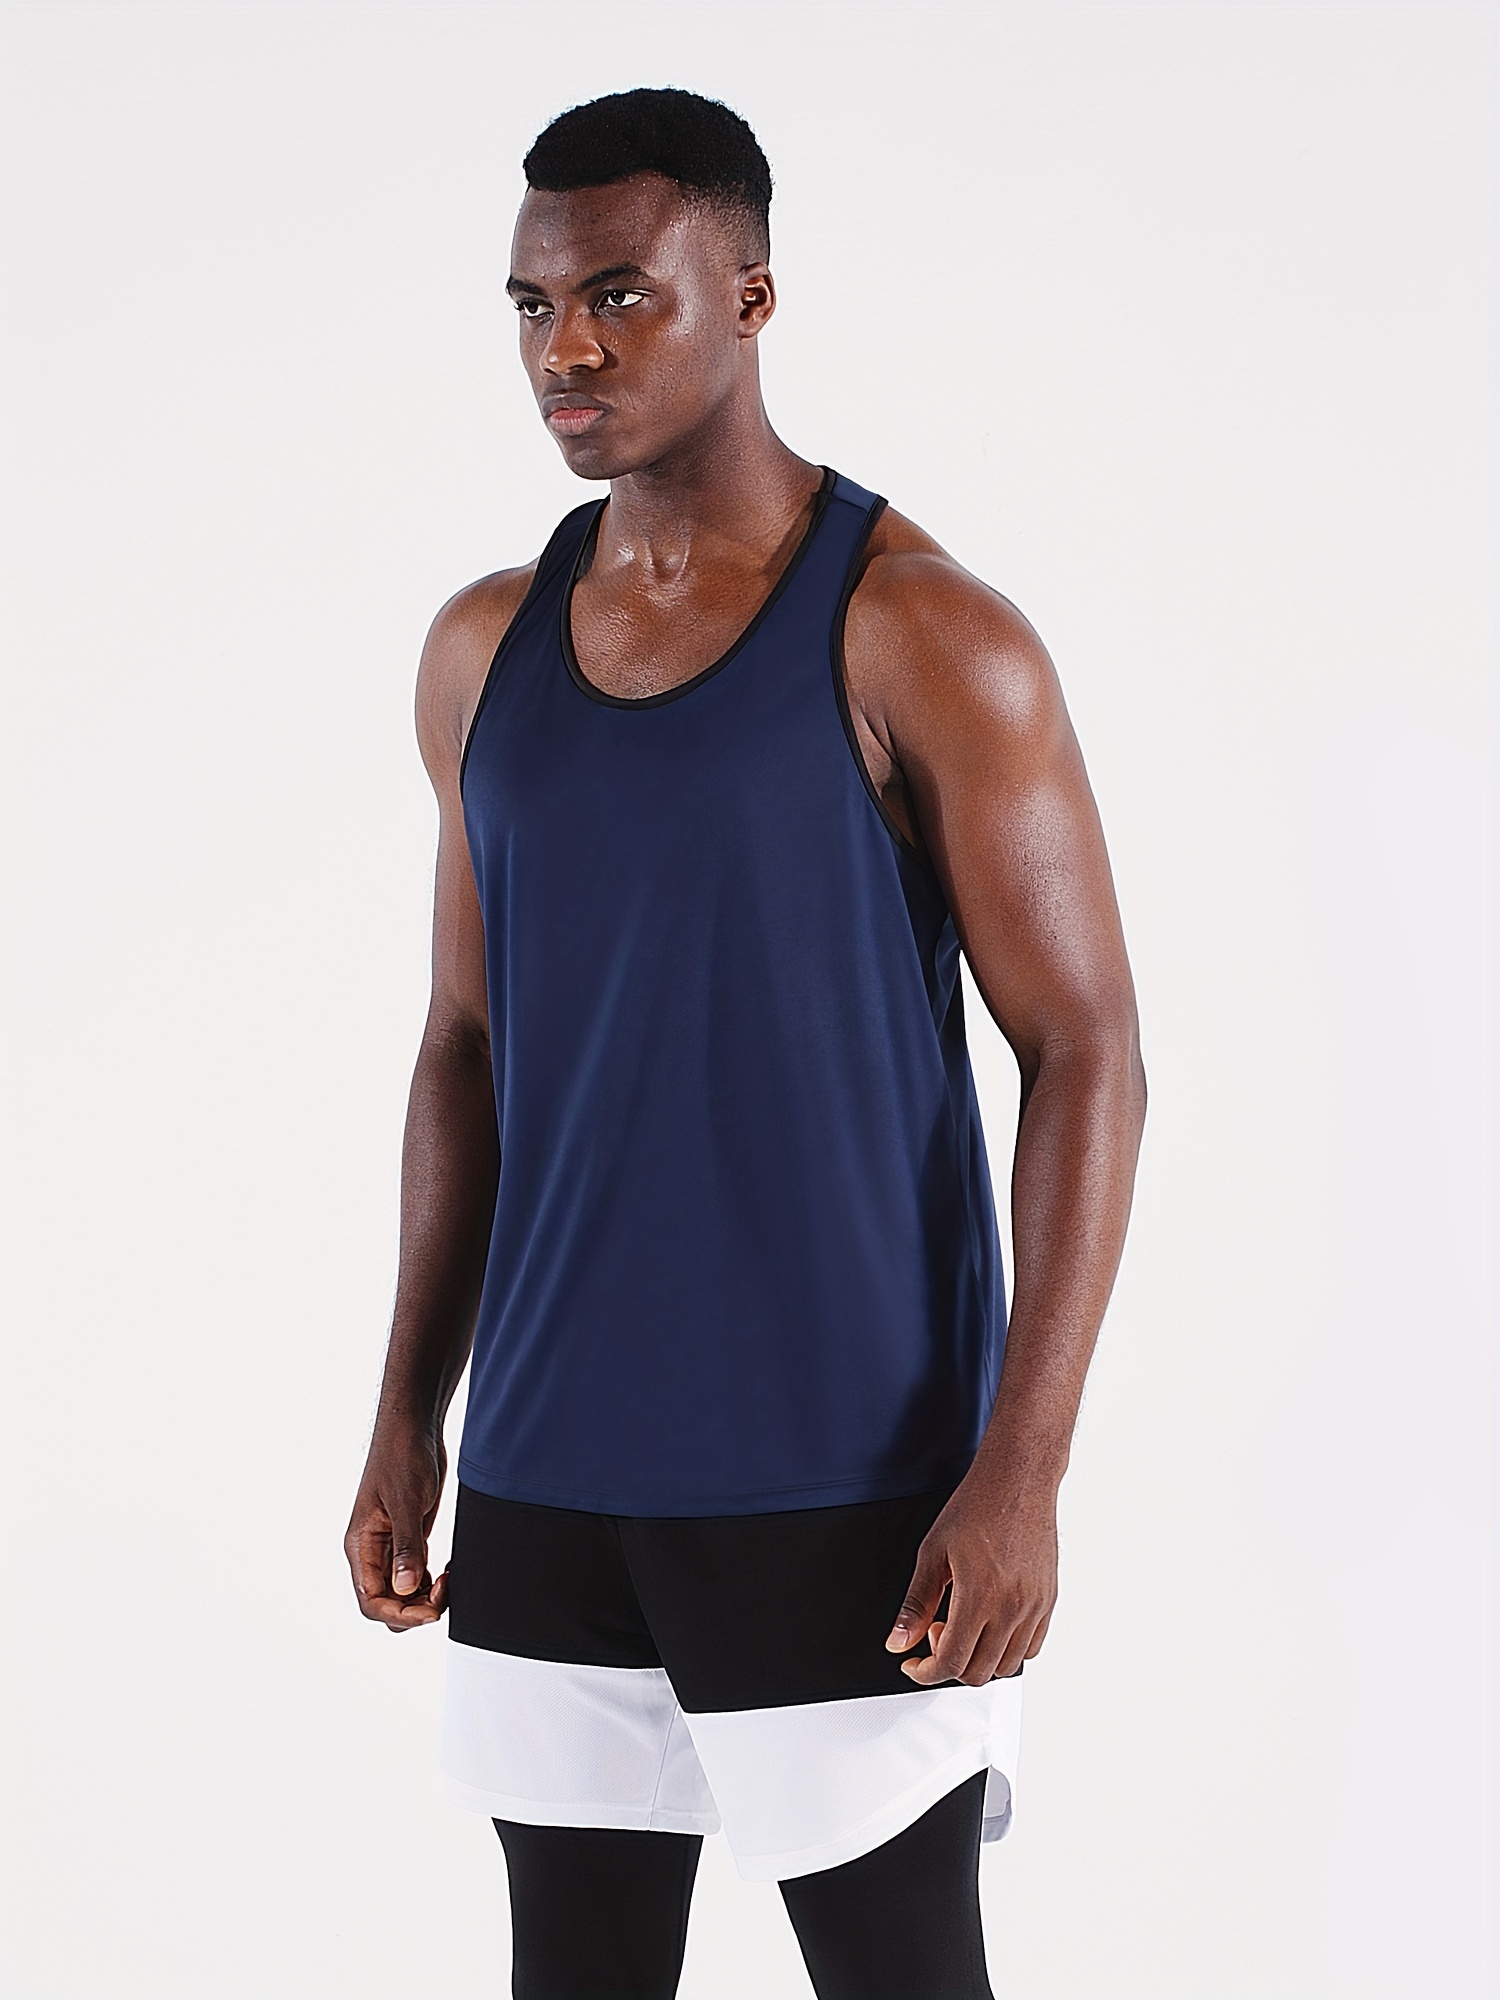 Camisetas sin mangas para hombres Stringer Gym Top Hombres Camisetas para  hombres para Fitness Chalecos Camisa Hombre Sudadera sin mangas Camisetas